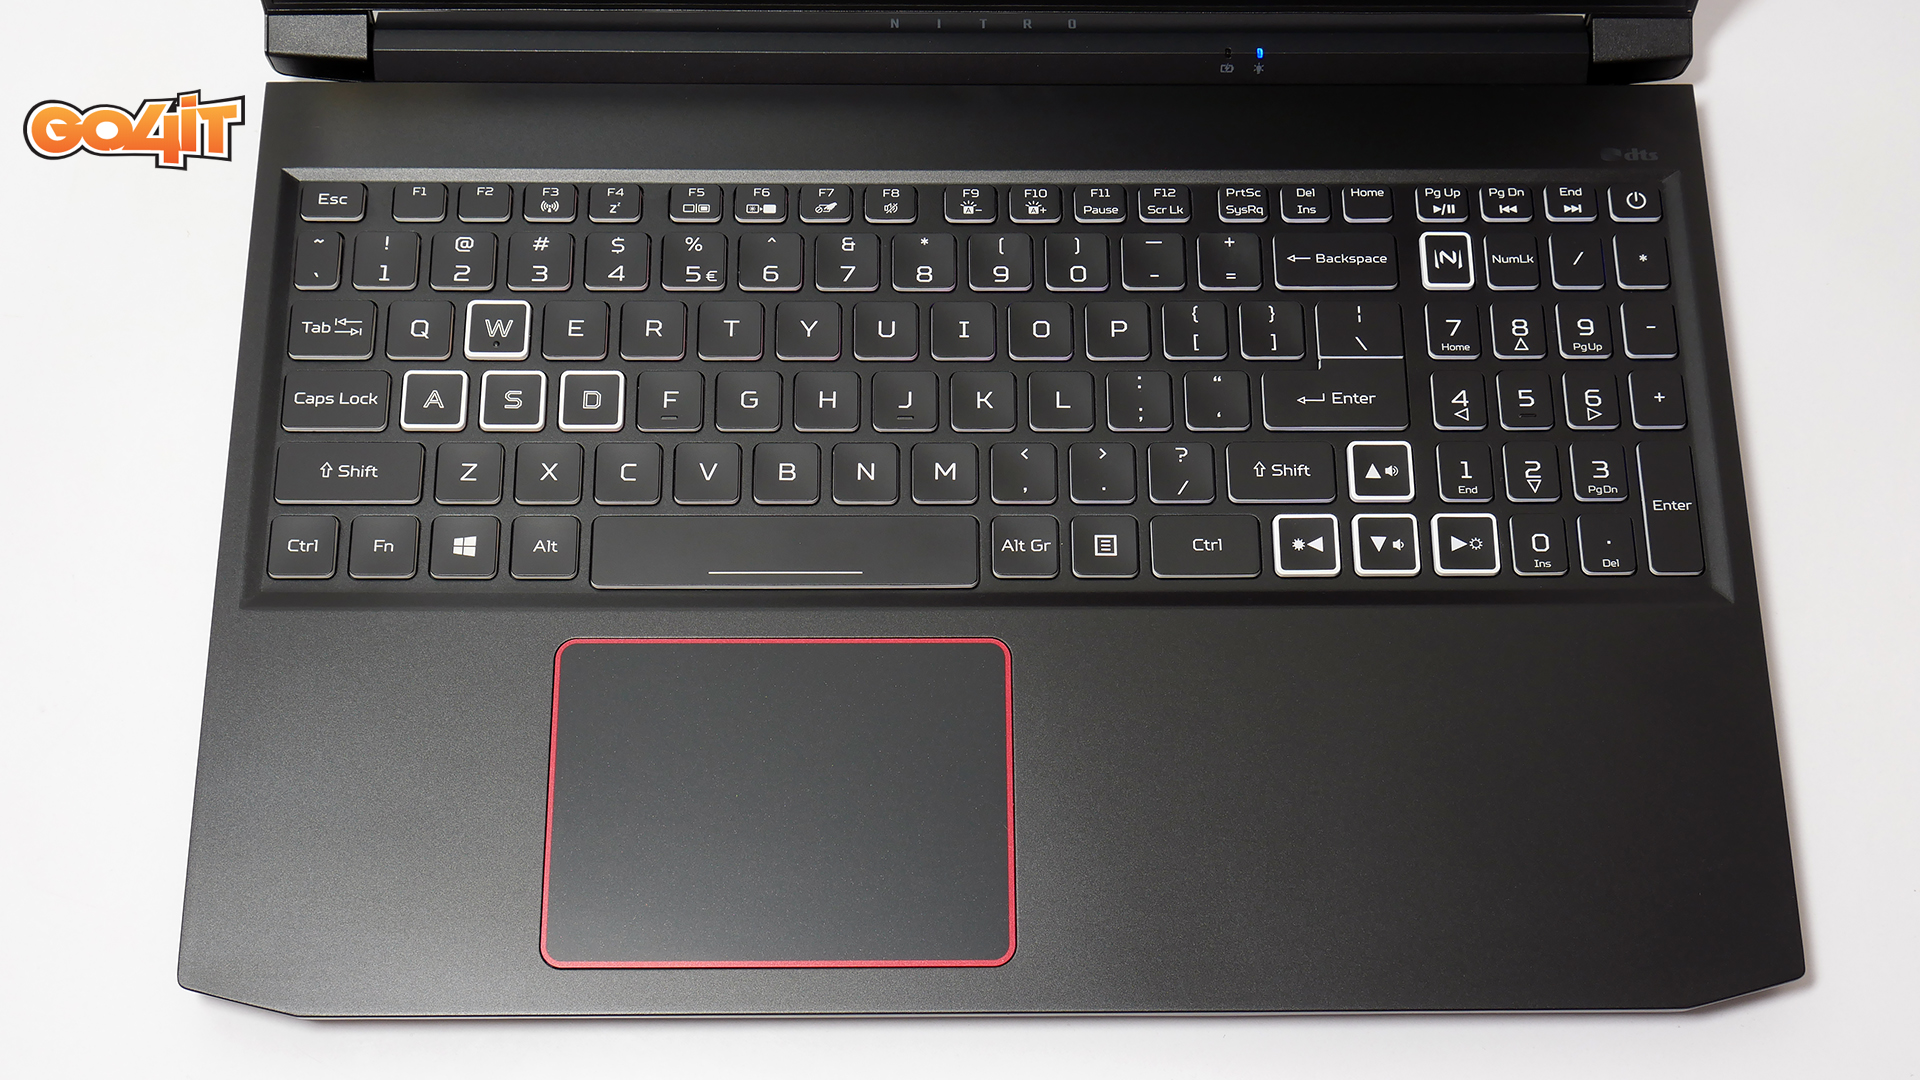 Acer Nitro 7 keyboard